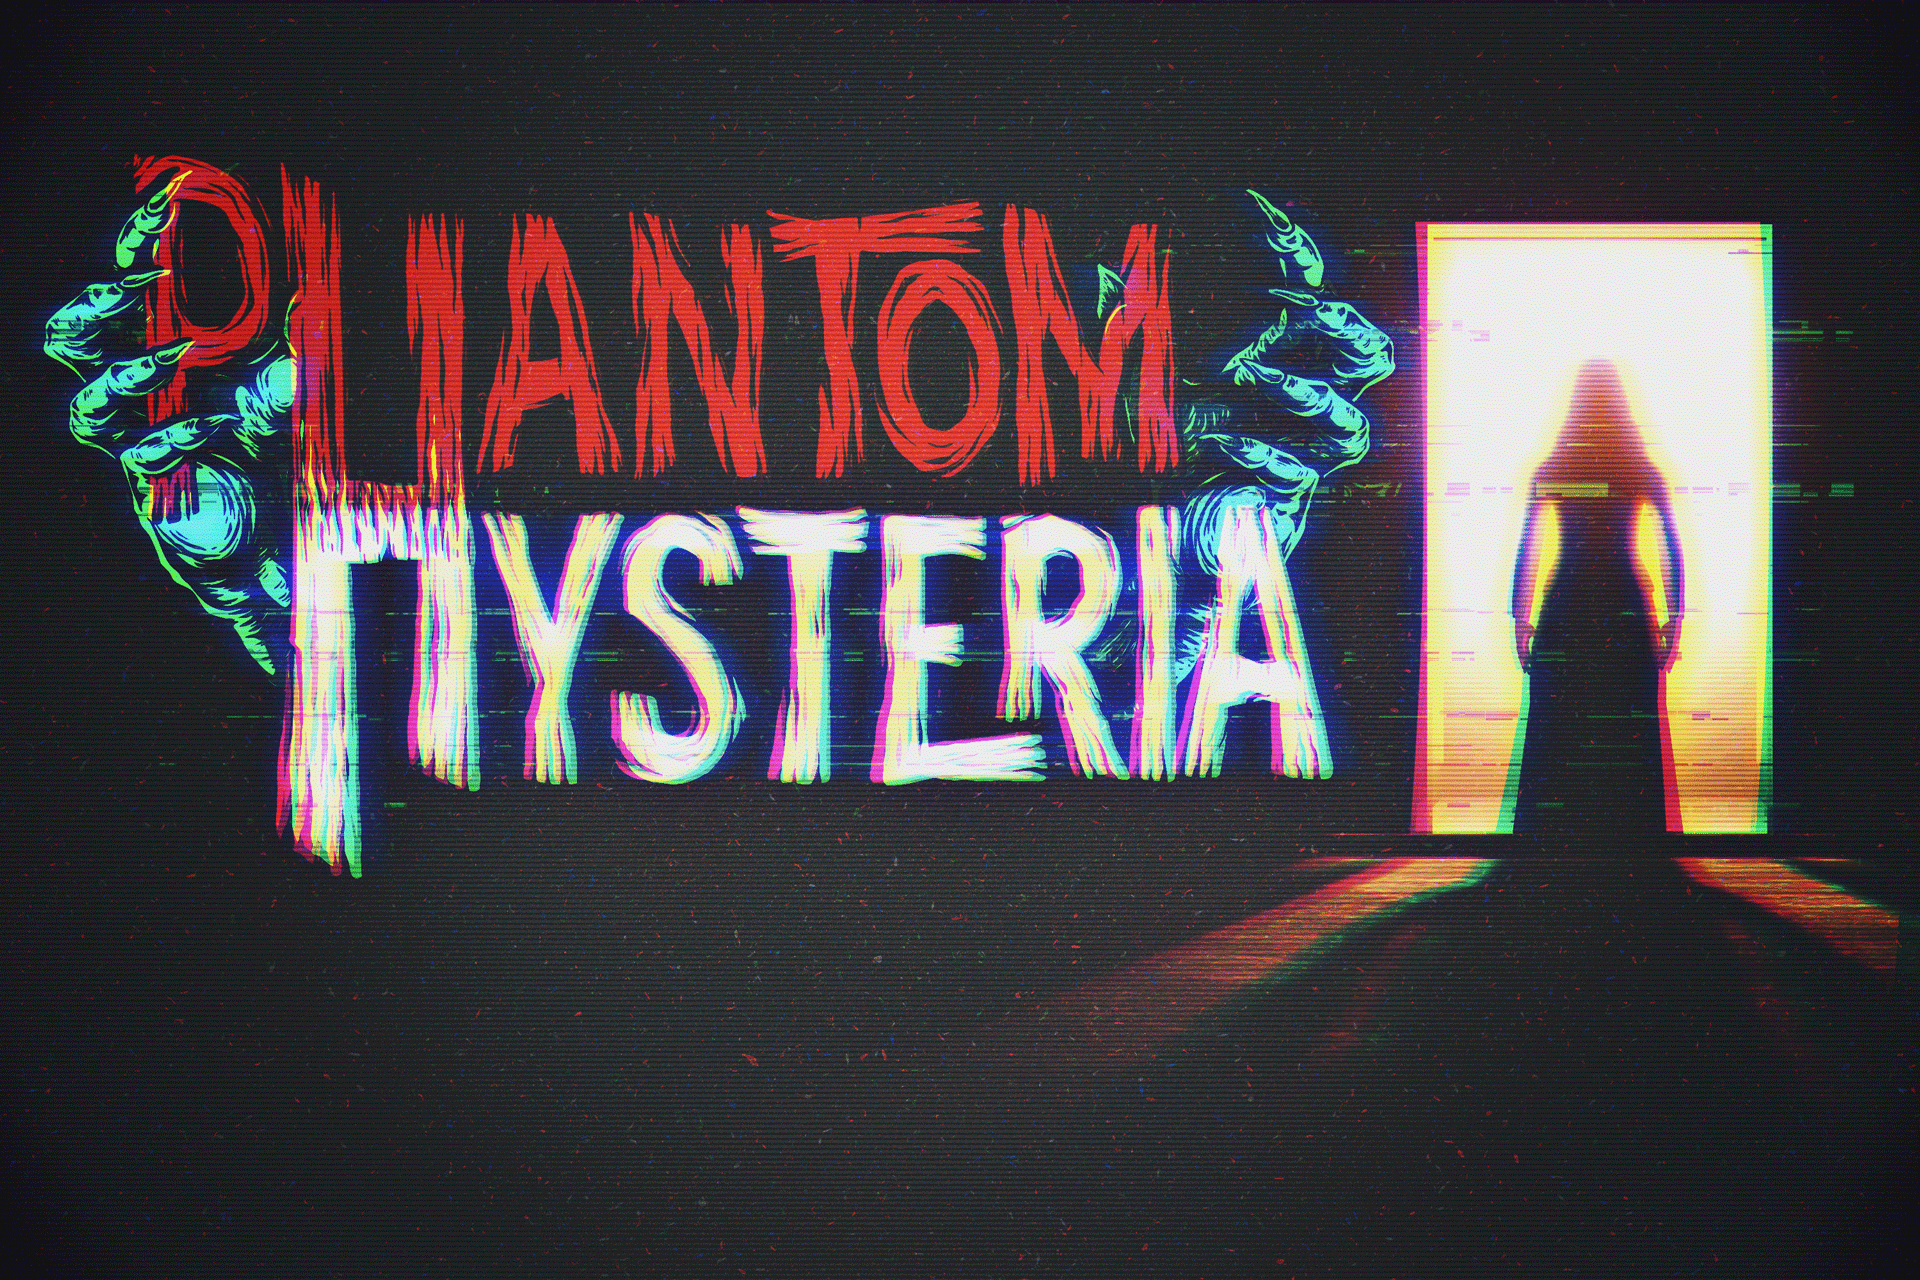 Phantom Hysteria promo3